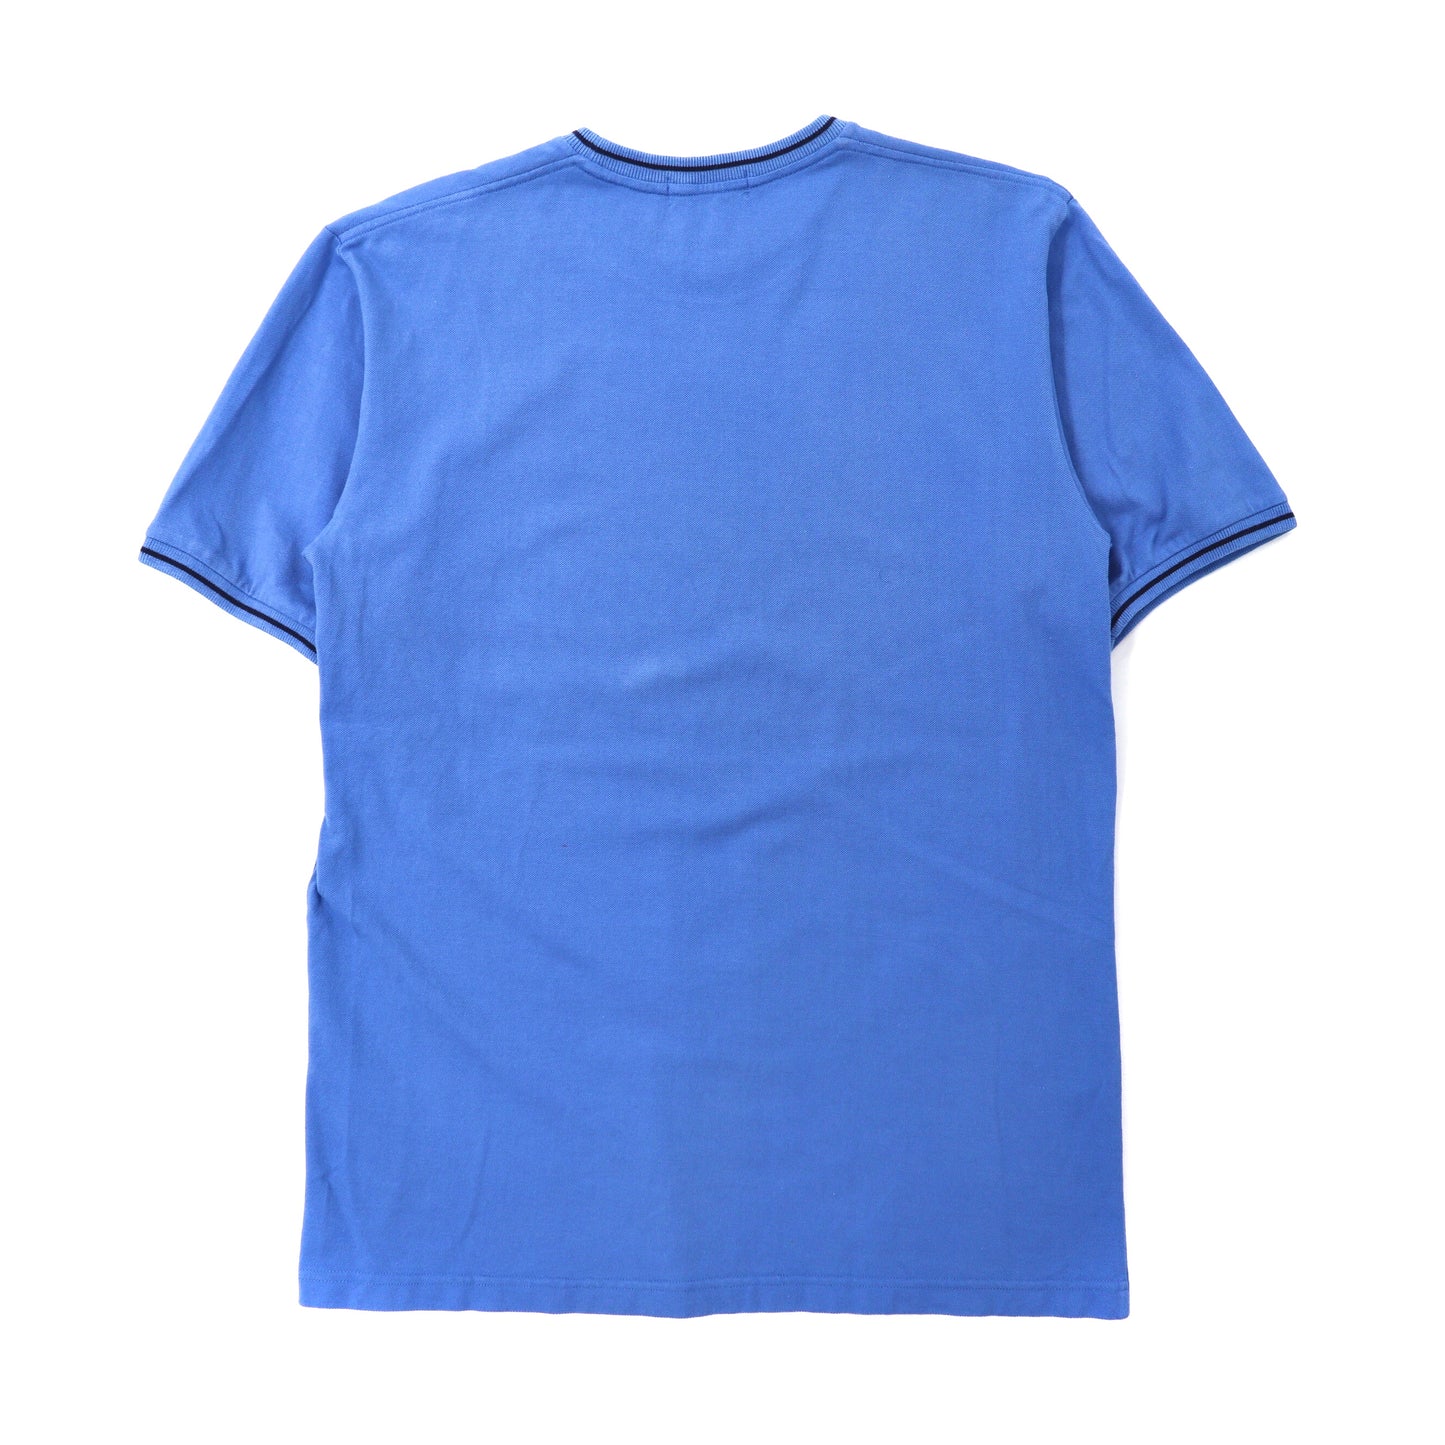 Polo by Ralph Lauren クルーネックTシャツ 170 ブルー コットン スモールポニー刺繍